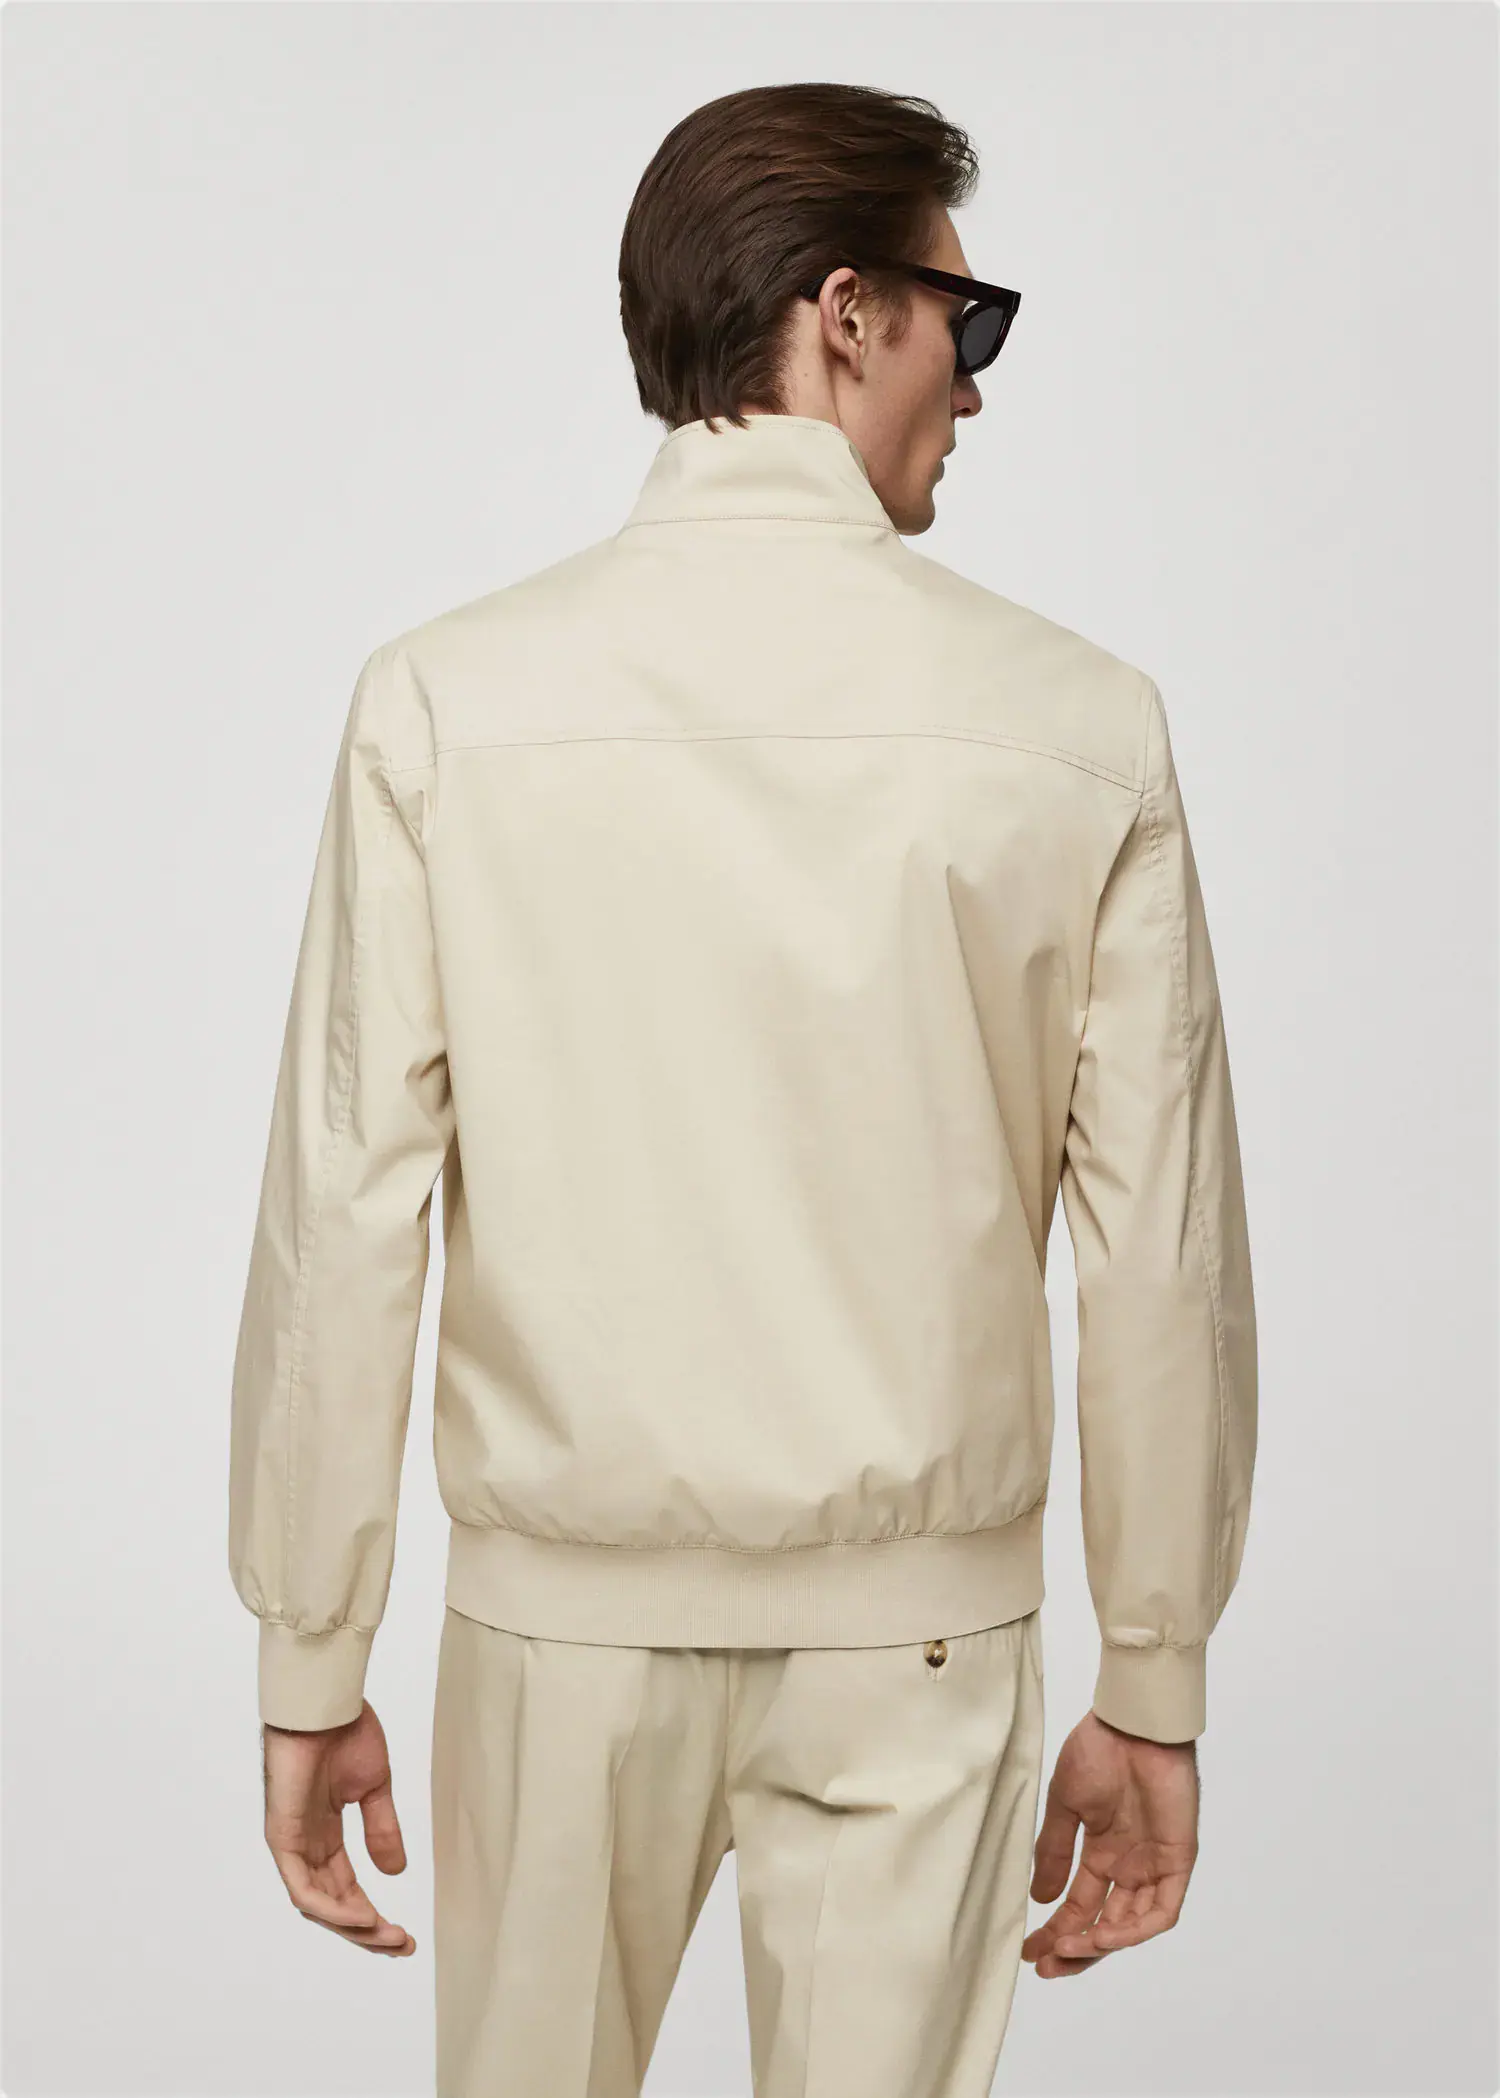 Mango Stretch cotton jacket with zip. 3